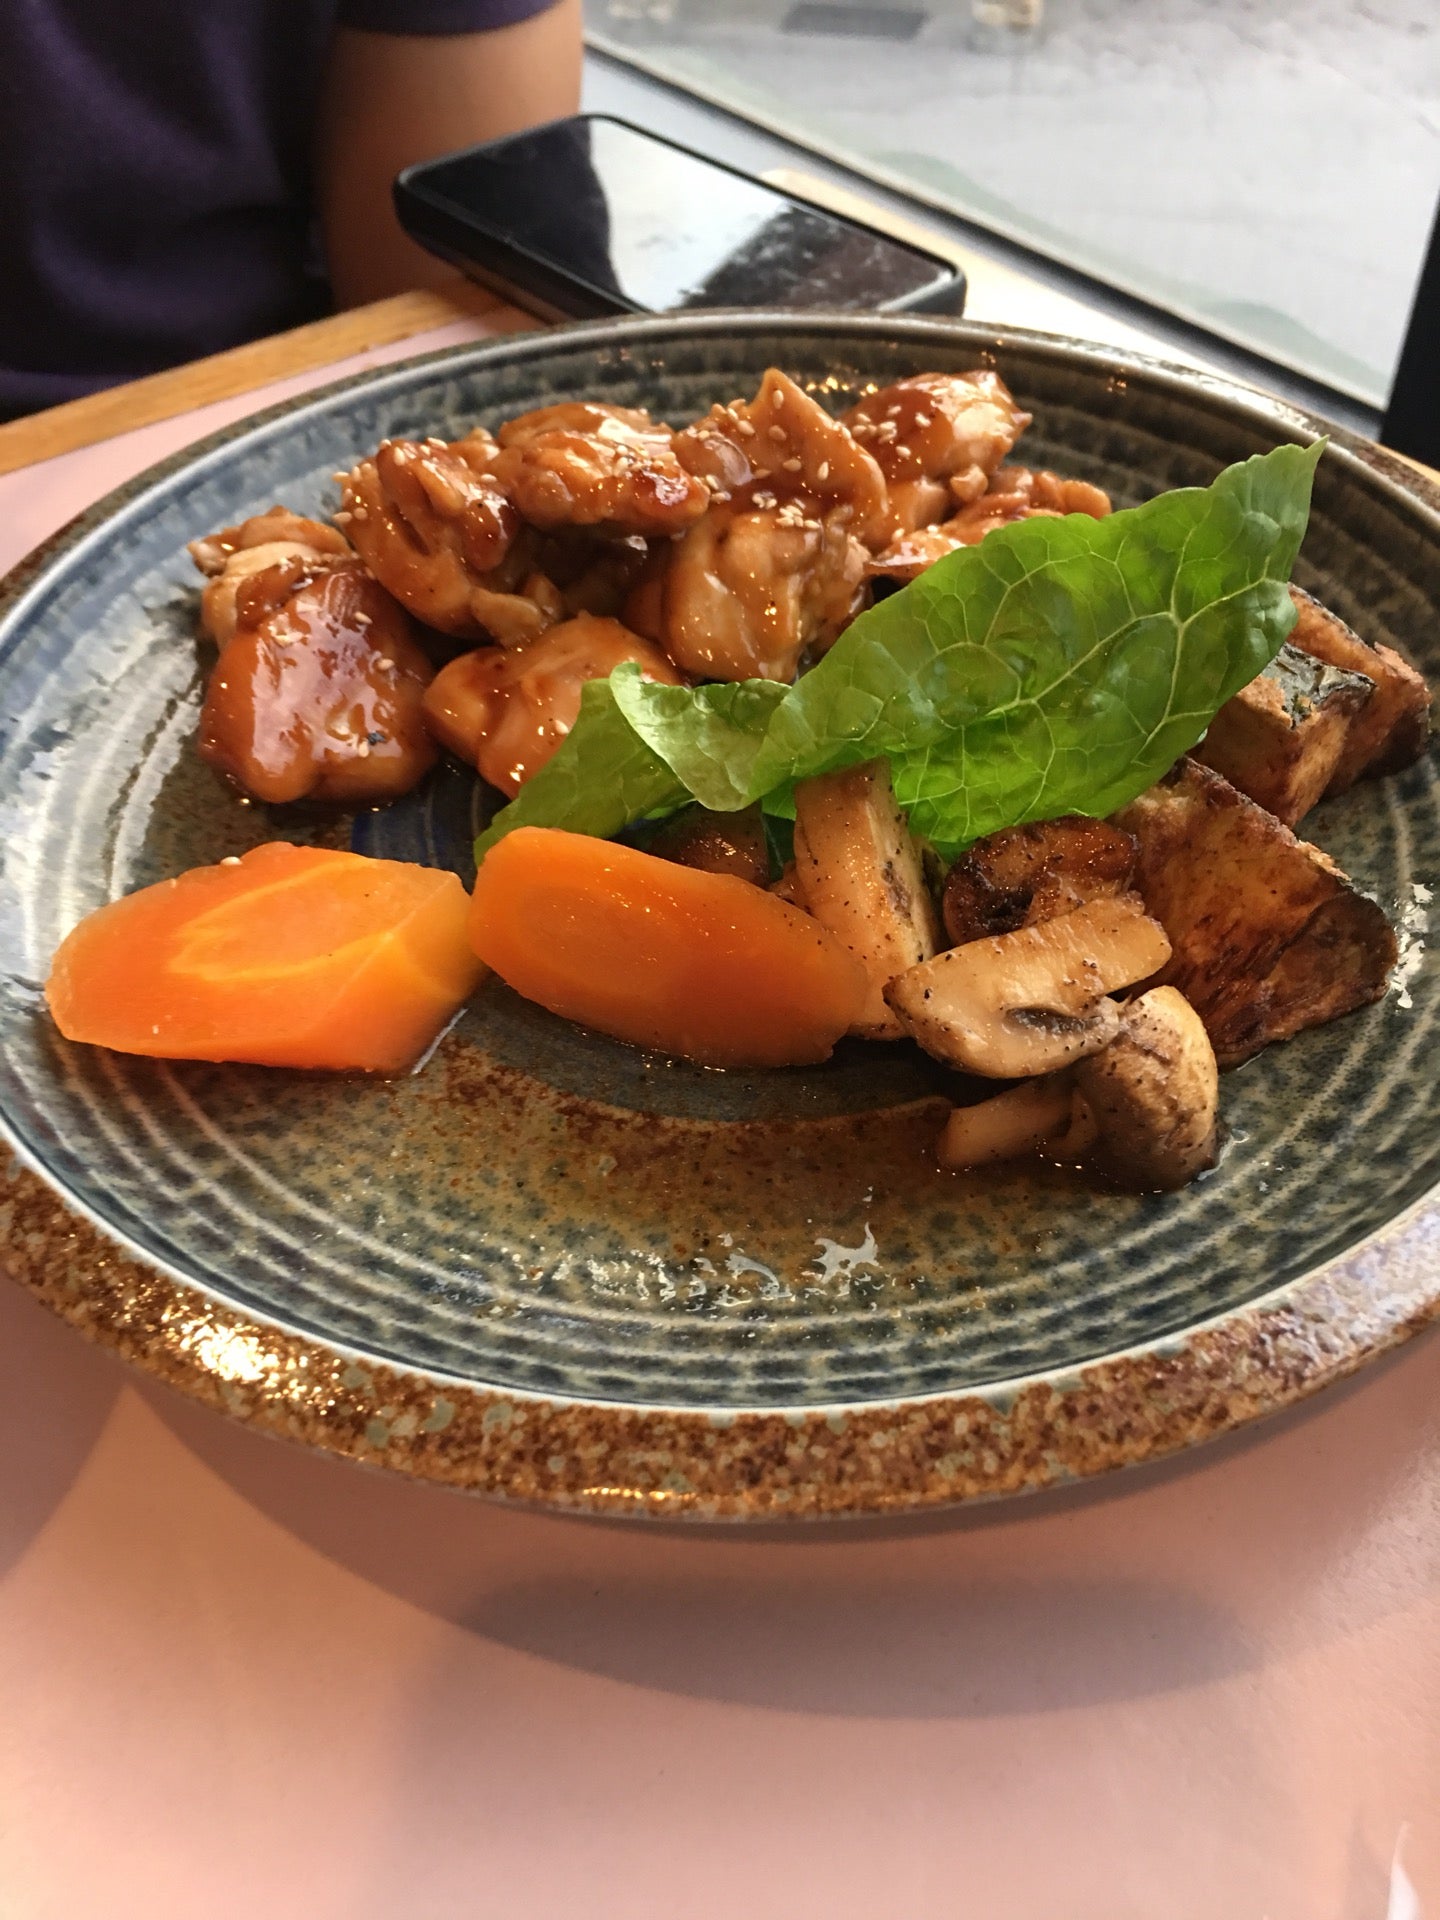 Japanese Restaurant Miki